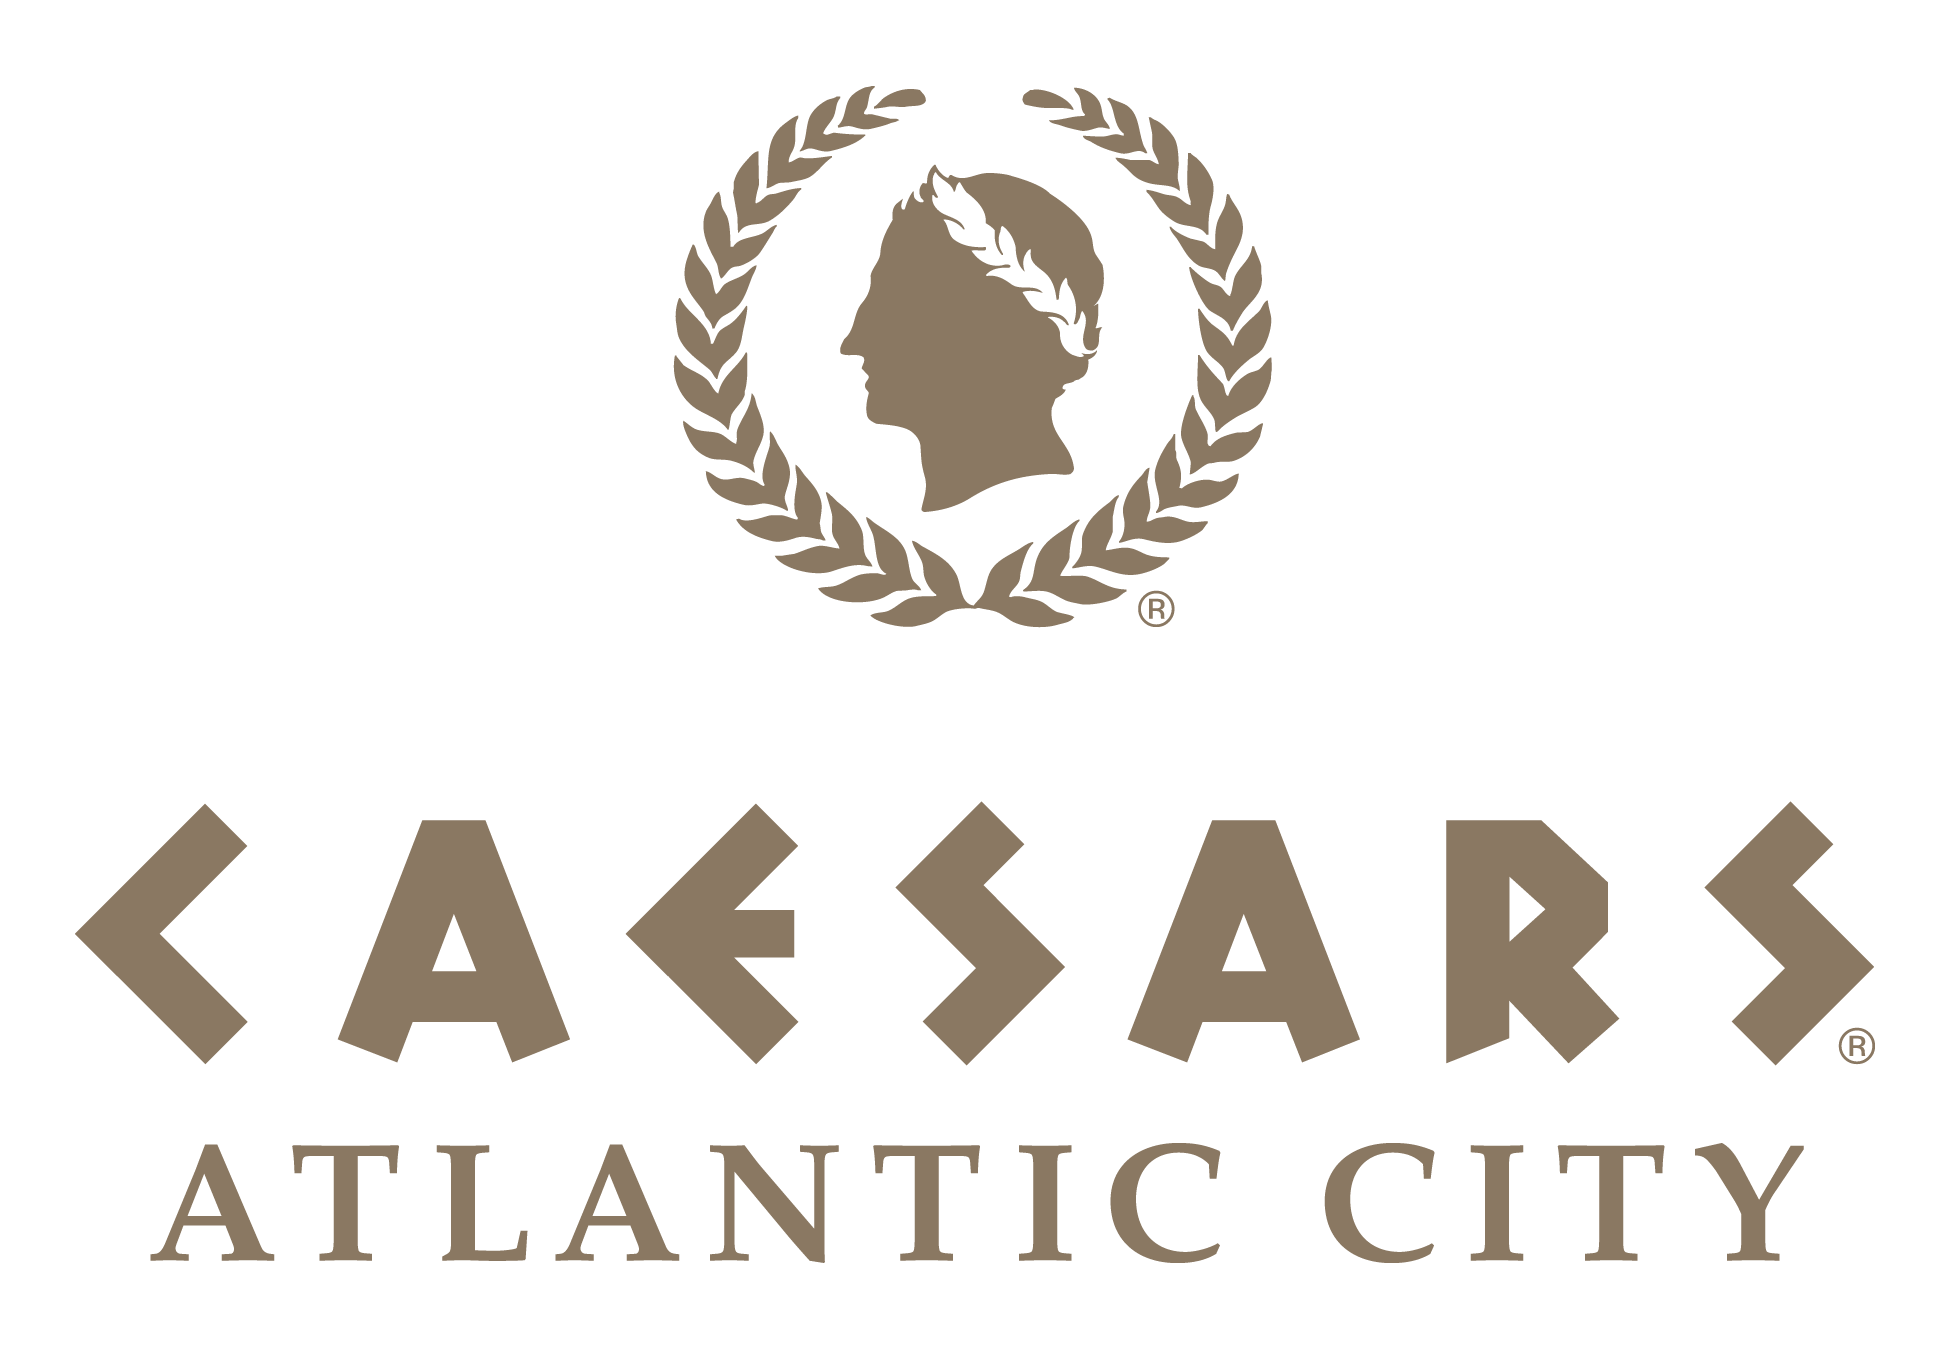 Alanic City Caesars Logo - Caesars Atlantic City Photo Gallery - Caesars Entertainment